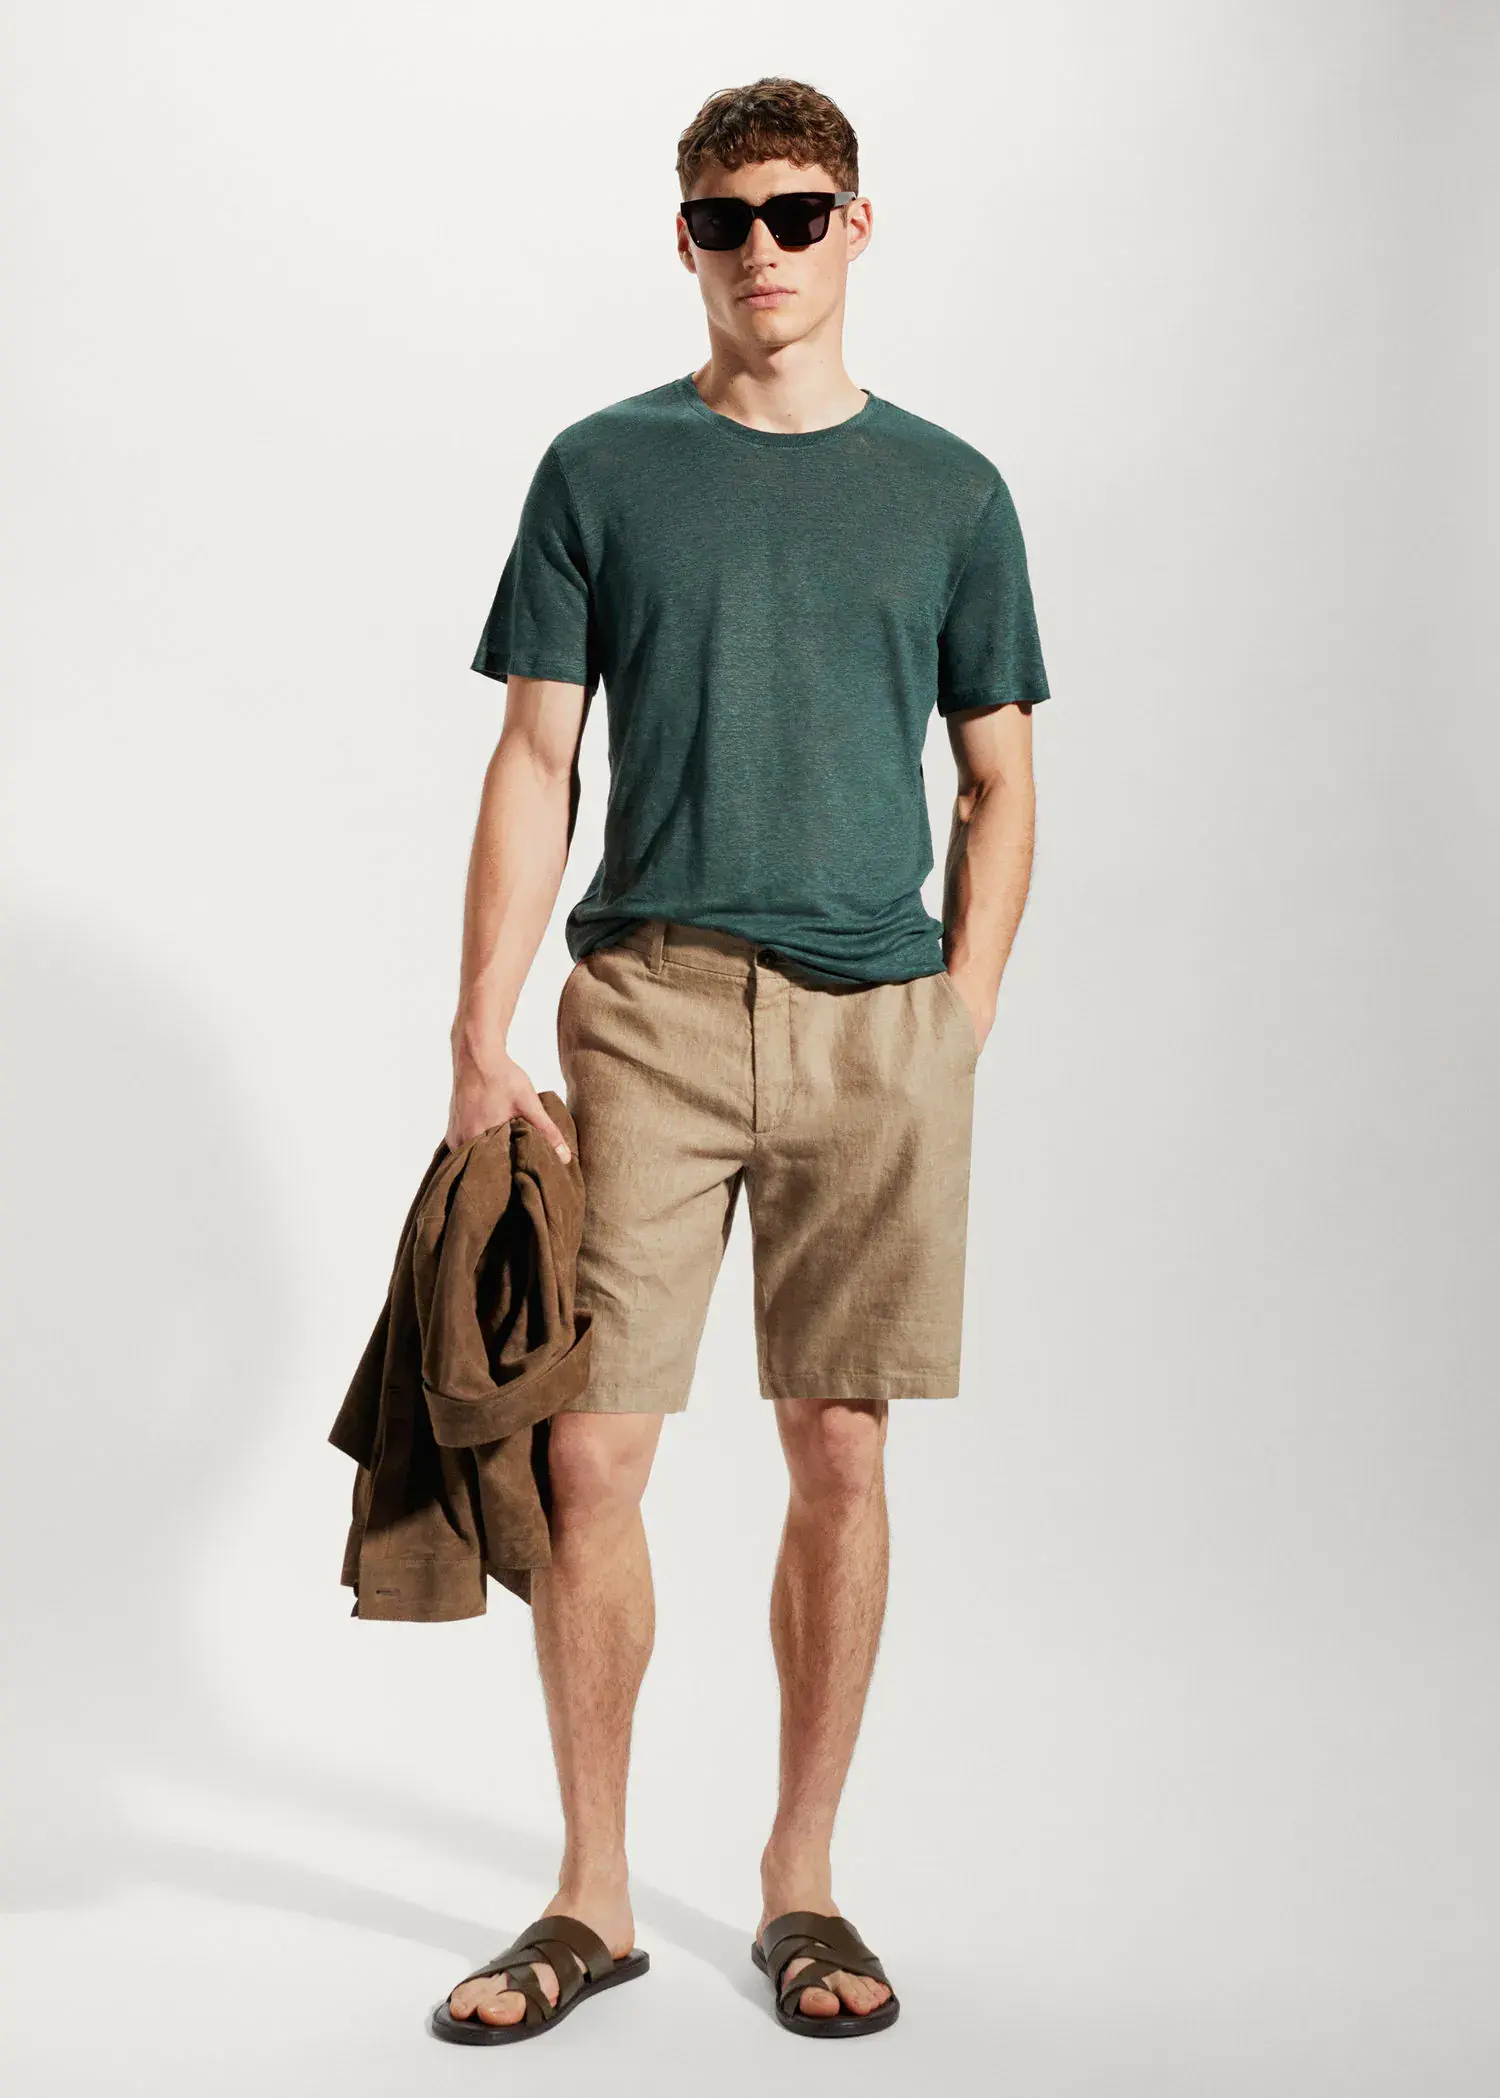 Mango 100% linen slim-fit t-shirt. a young man wearing a green shirt and brown shorts. 